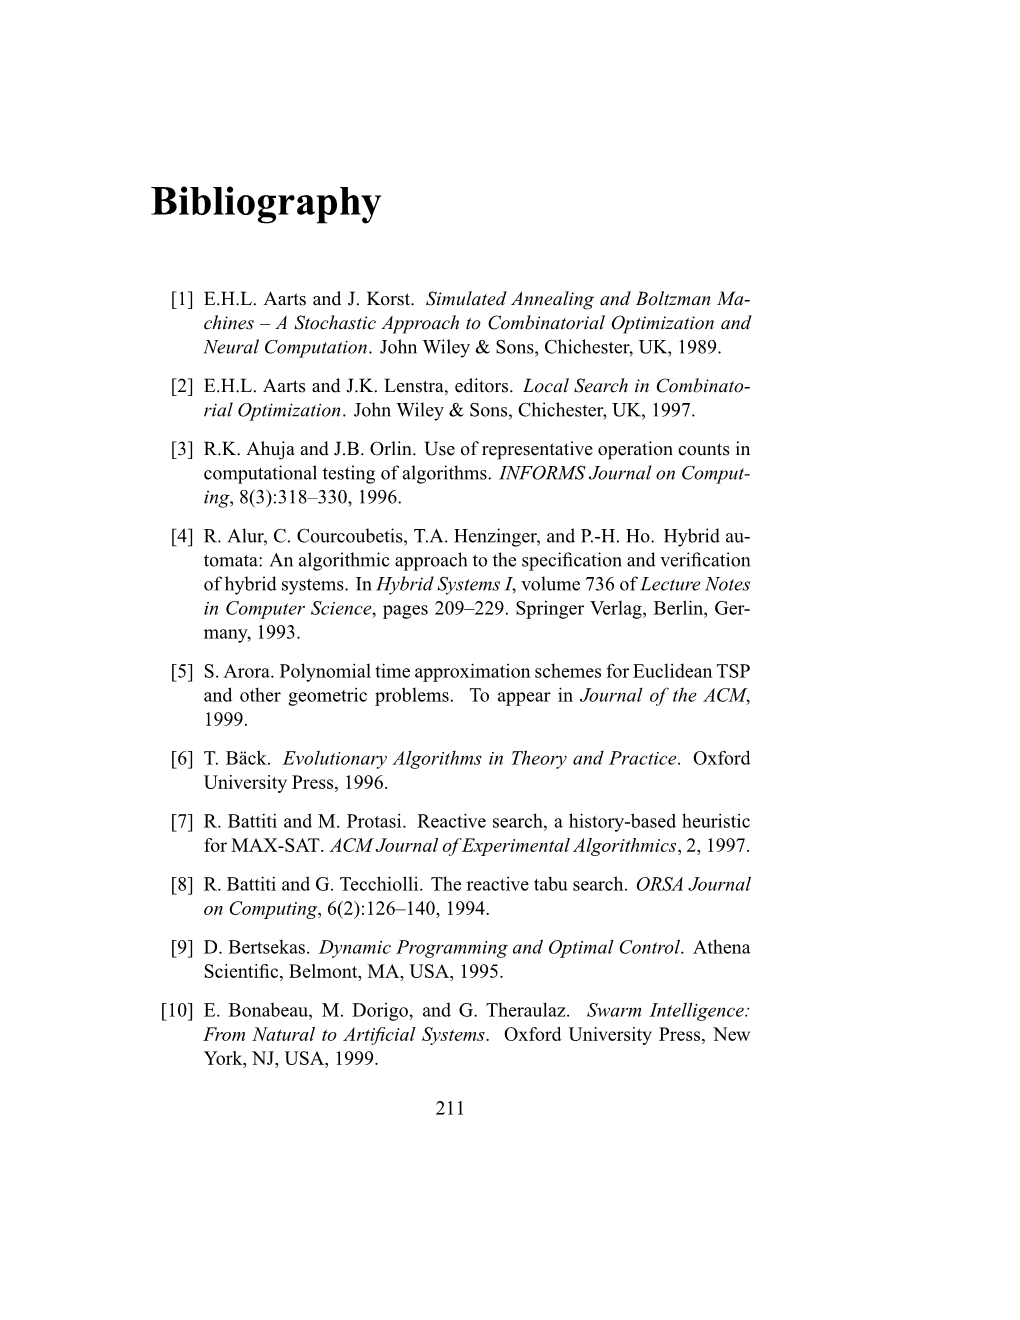 SLS Book, Draft of Bibliography